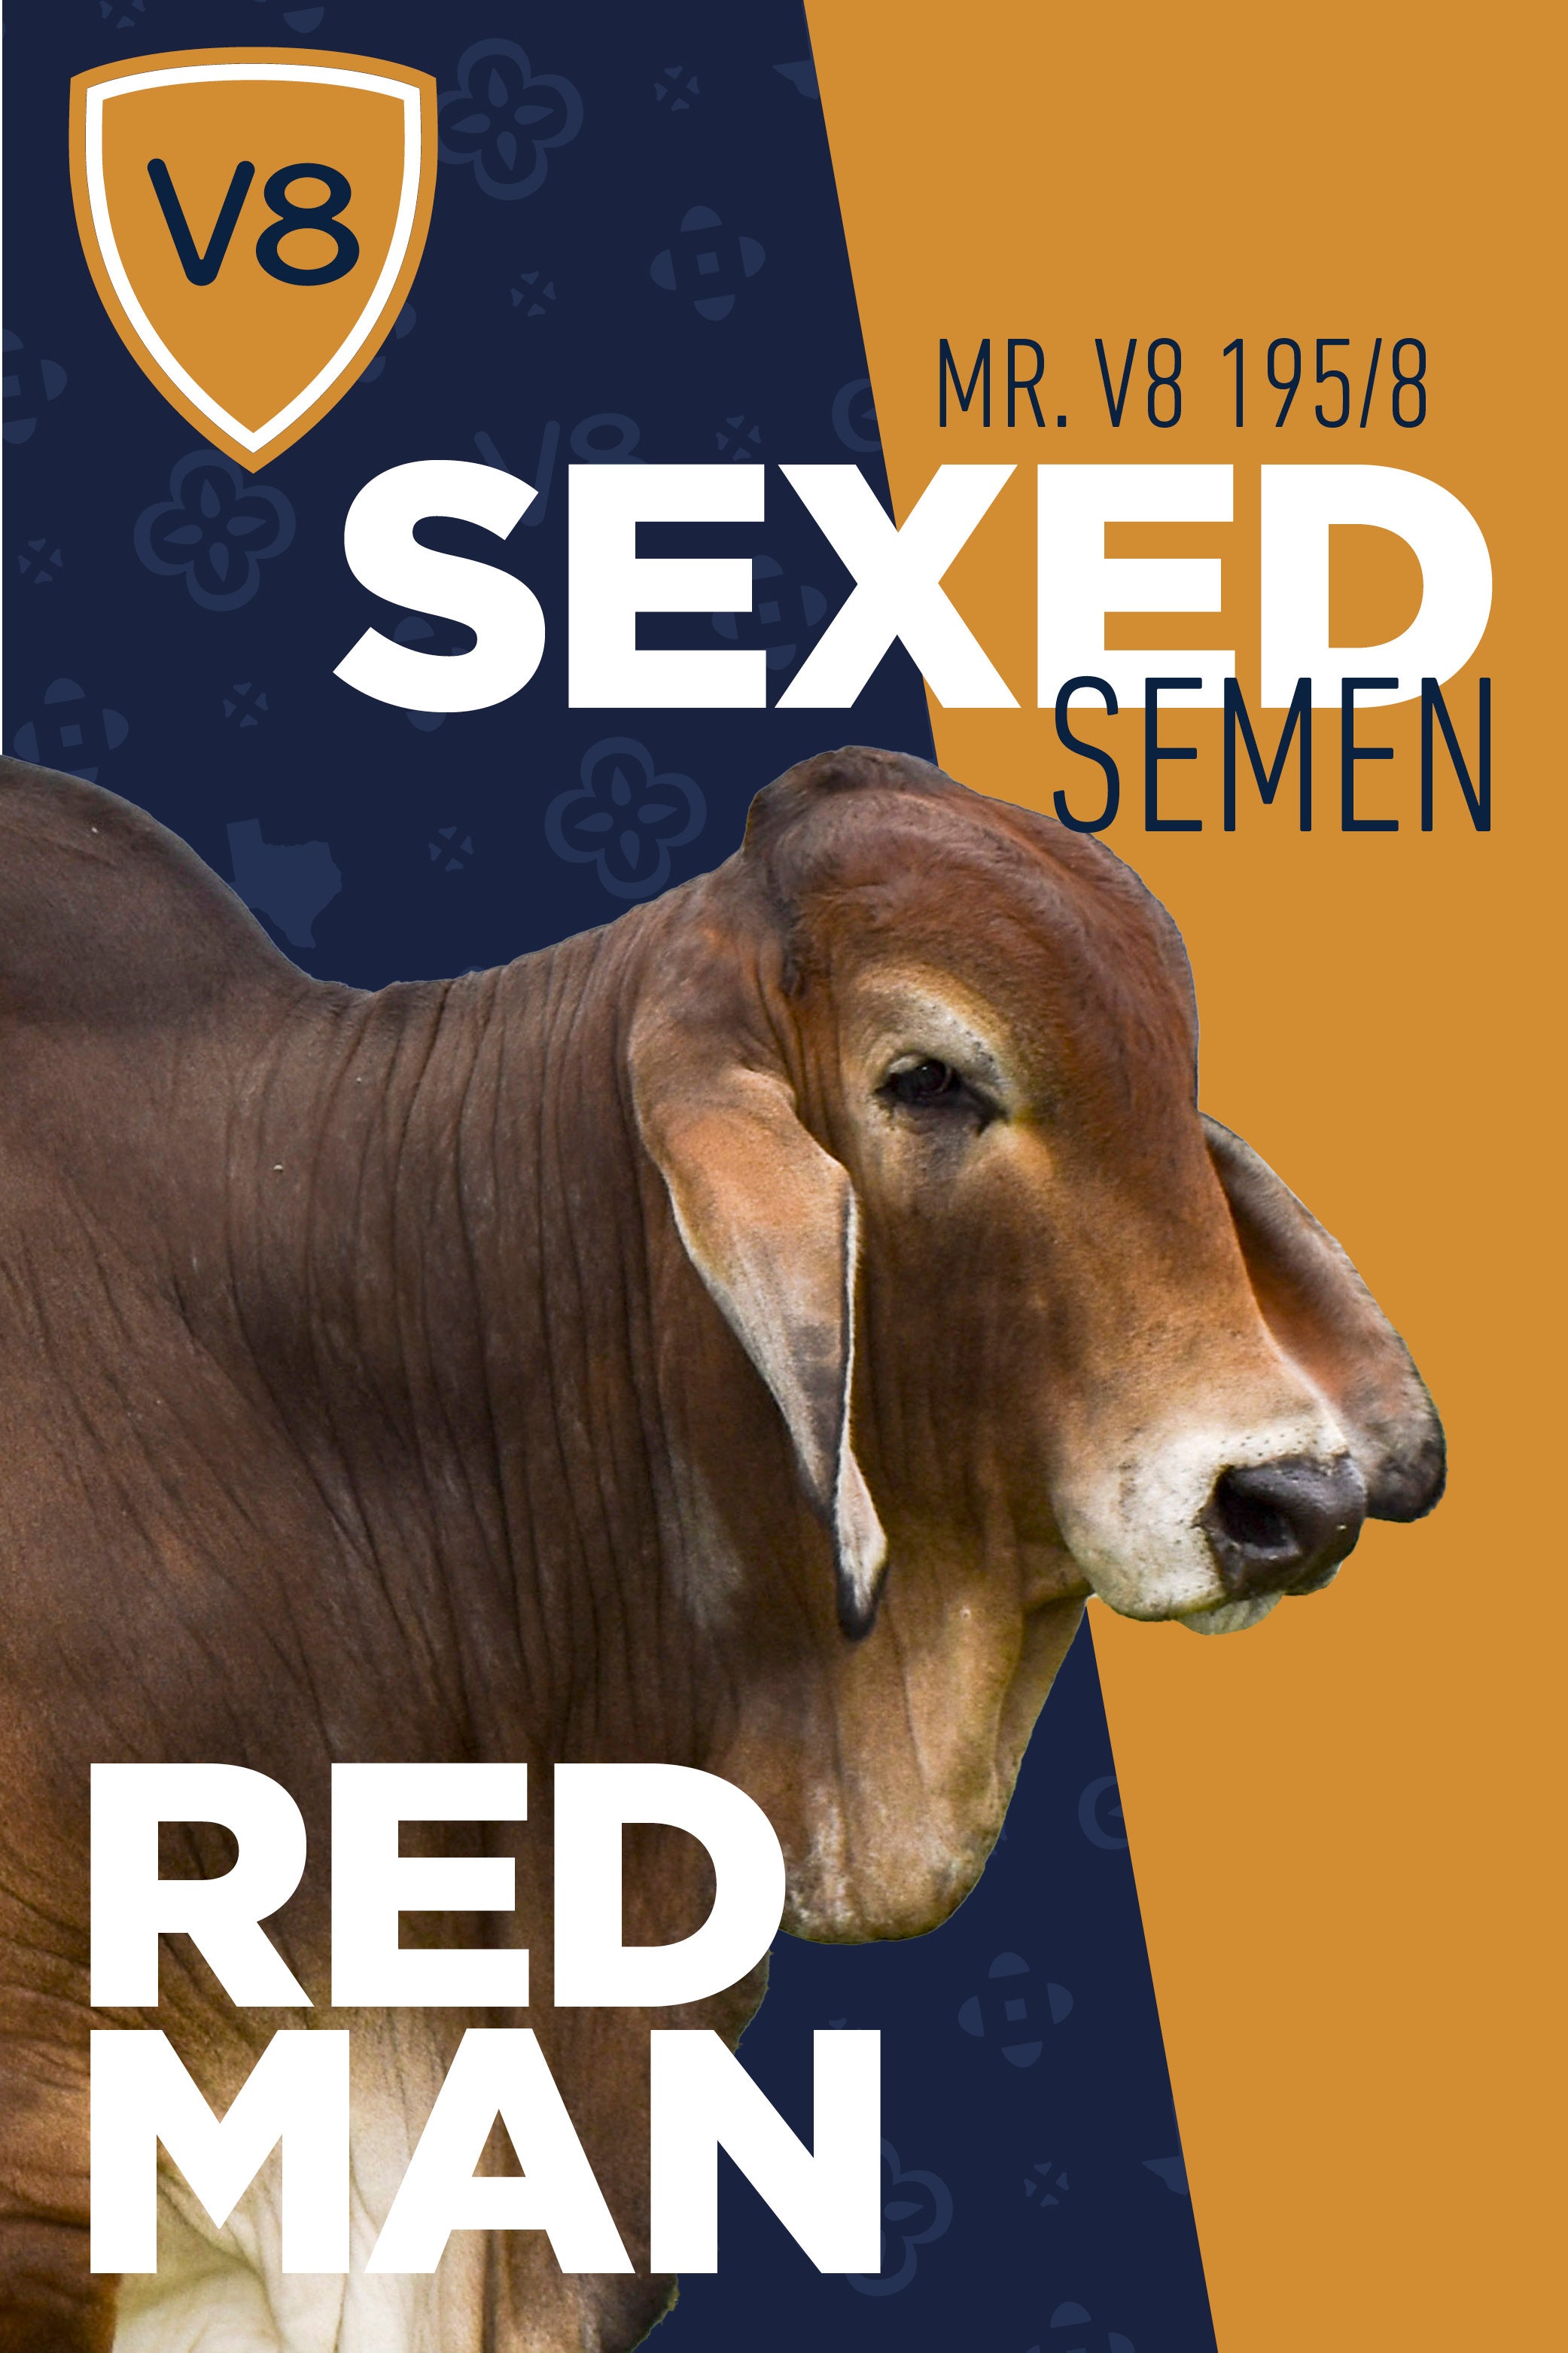 Mr. V8 195/8 "Red Man" Sexed Semen - Package of 2 Units